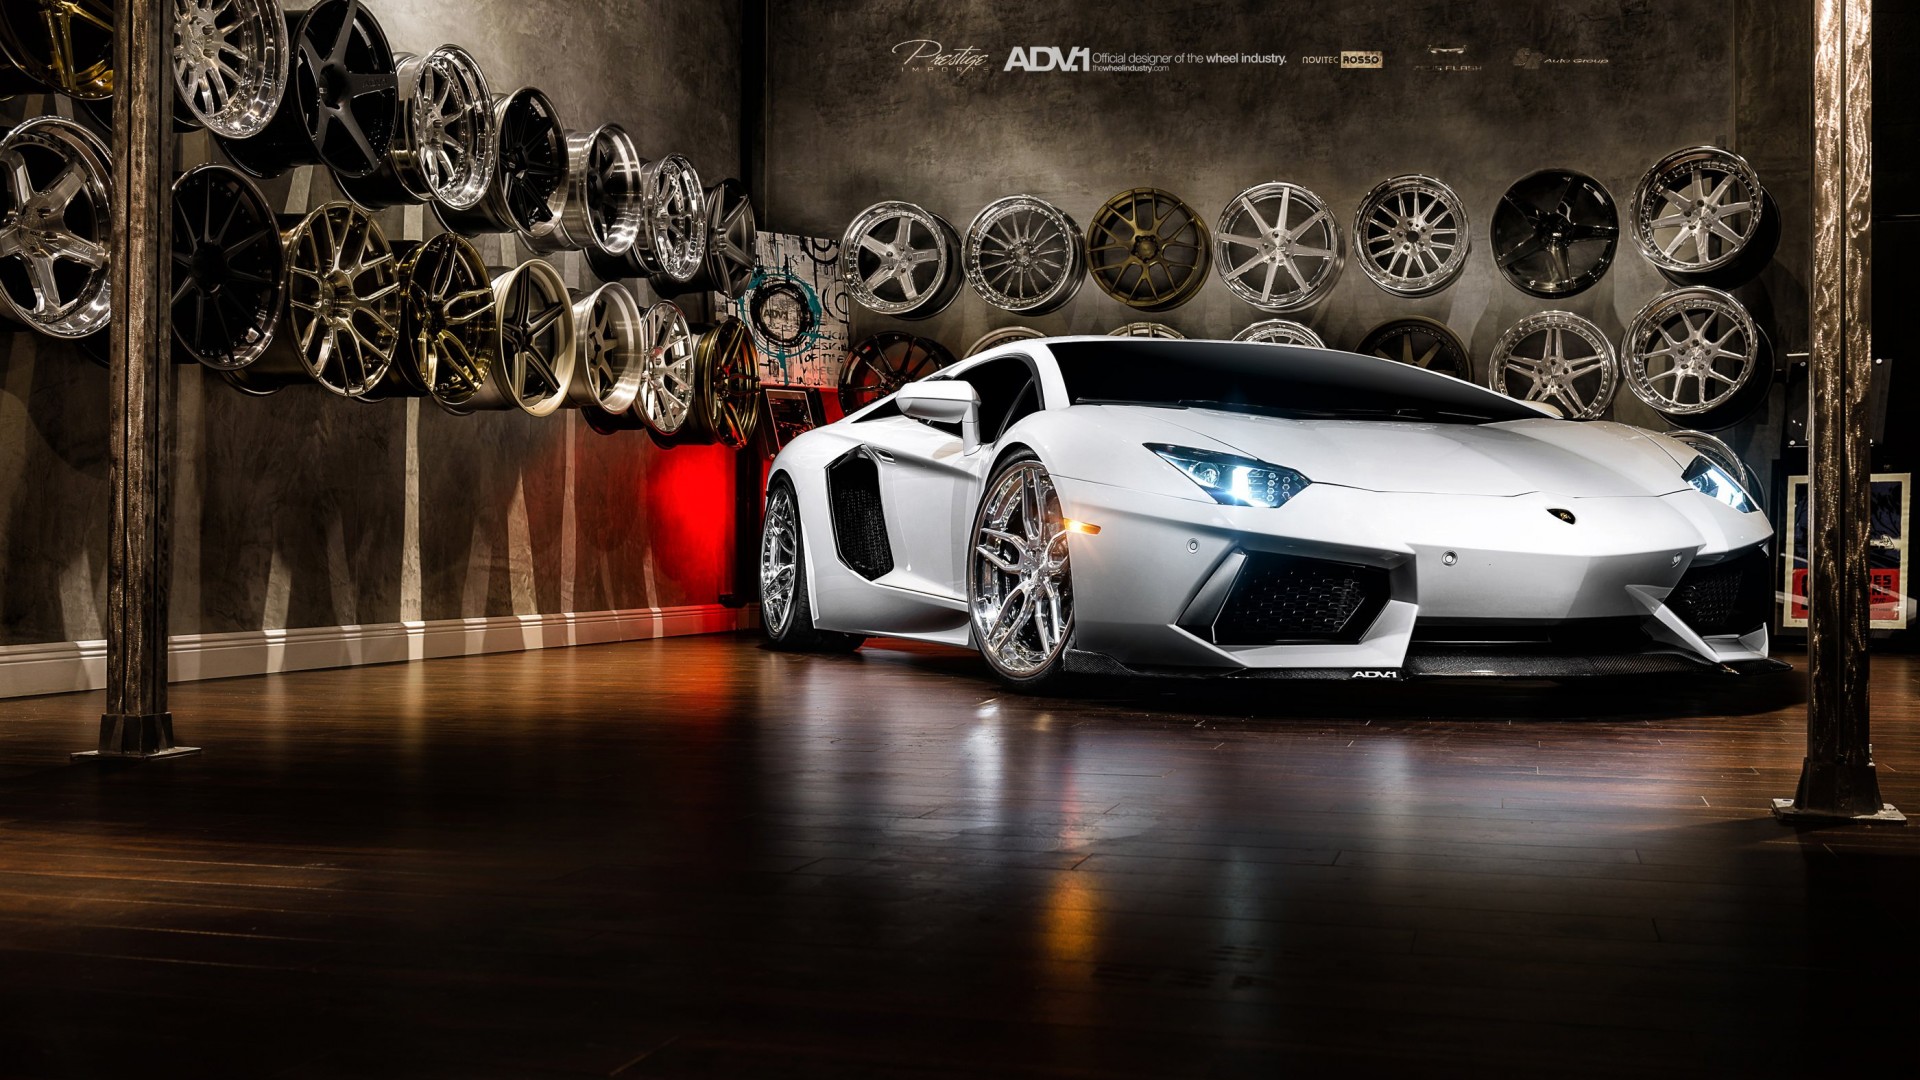 Lamborghini Aventador On ADV.1 Wheels Wallpaper for Desktop 1920x1080